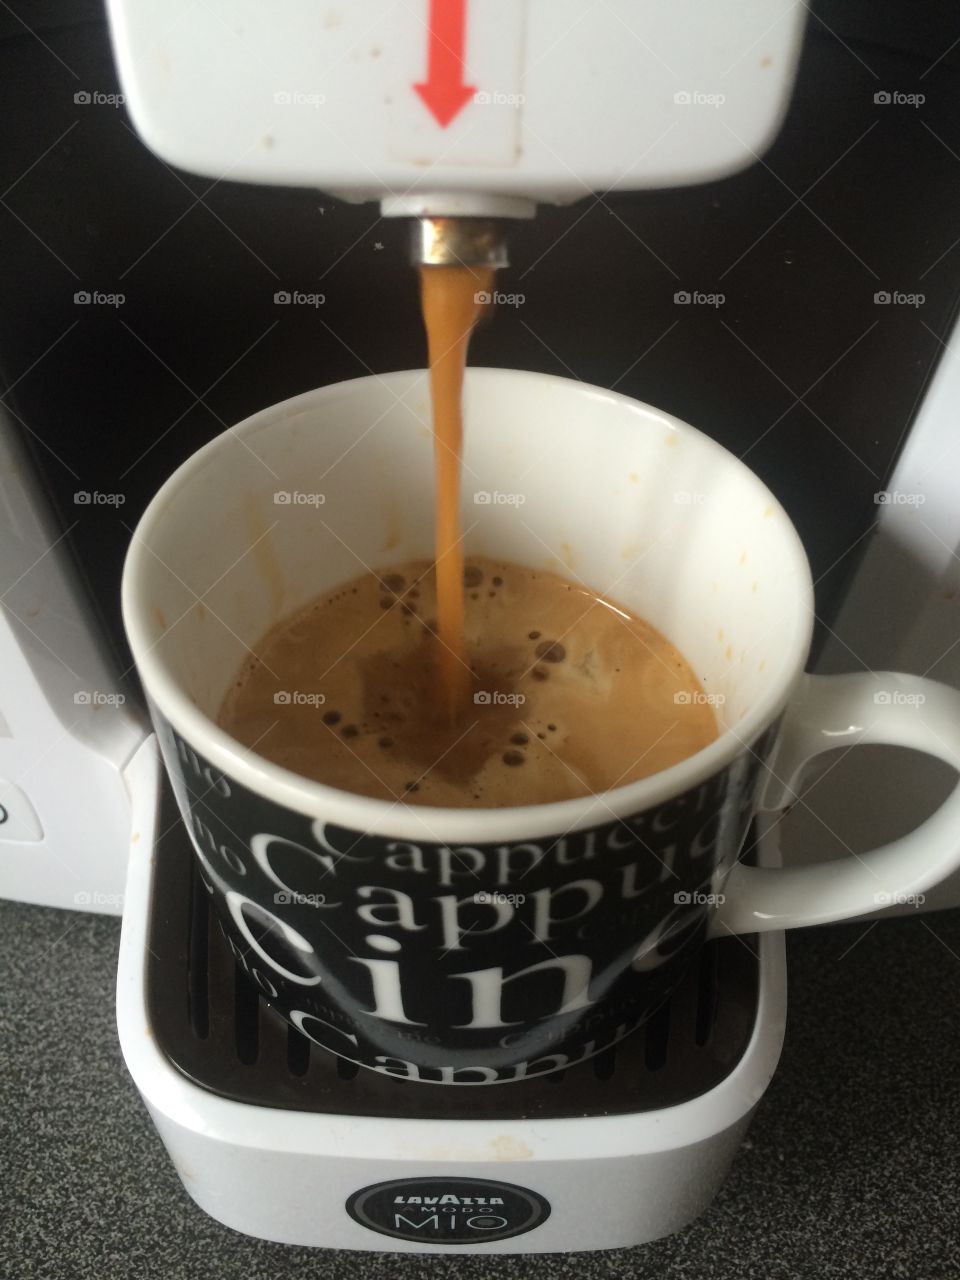 Making espresso coffee